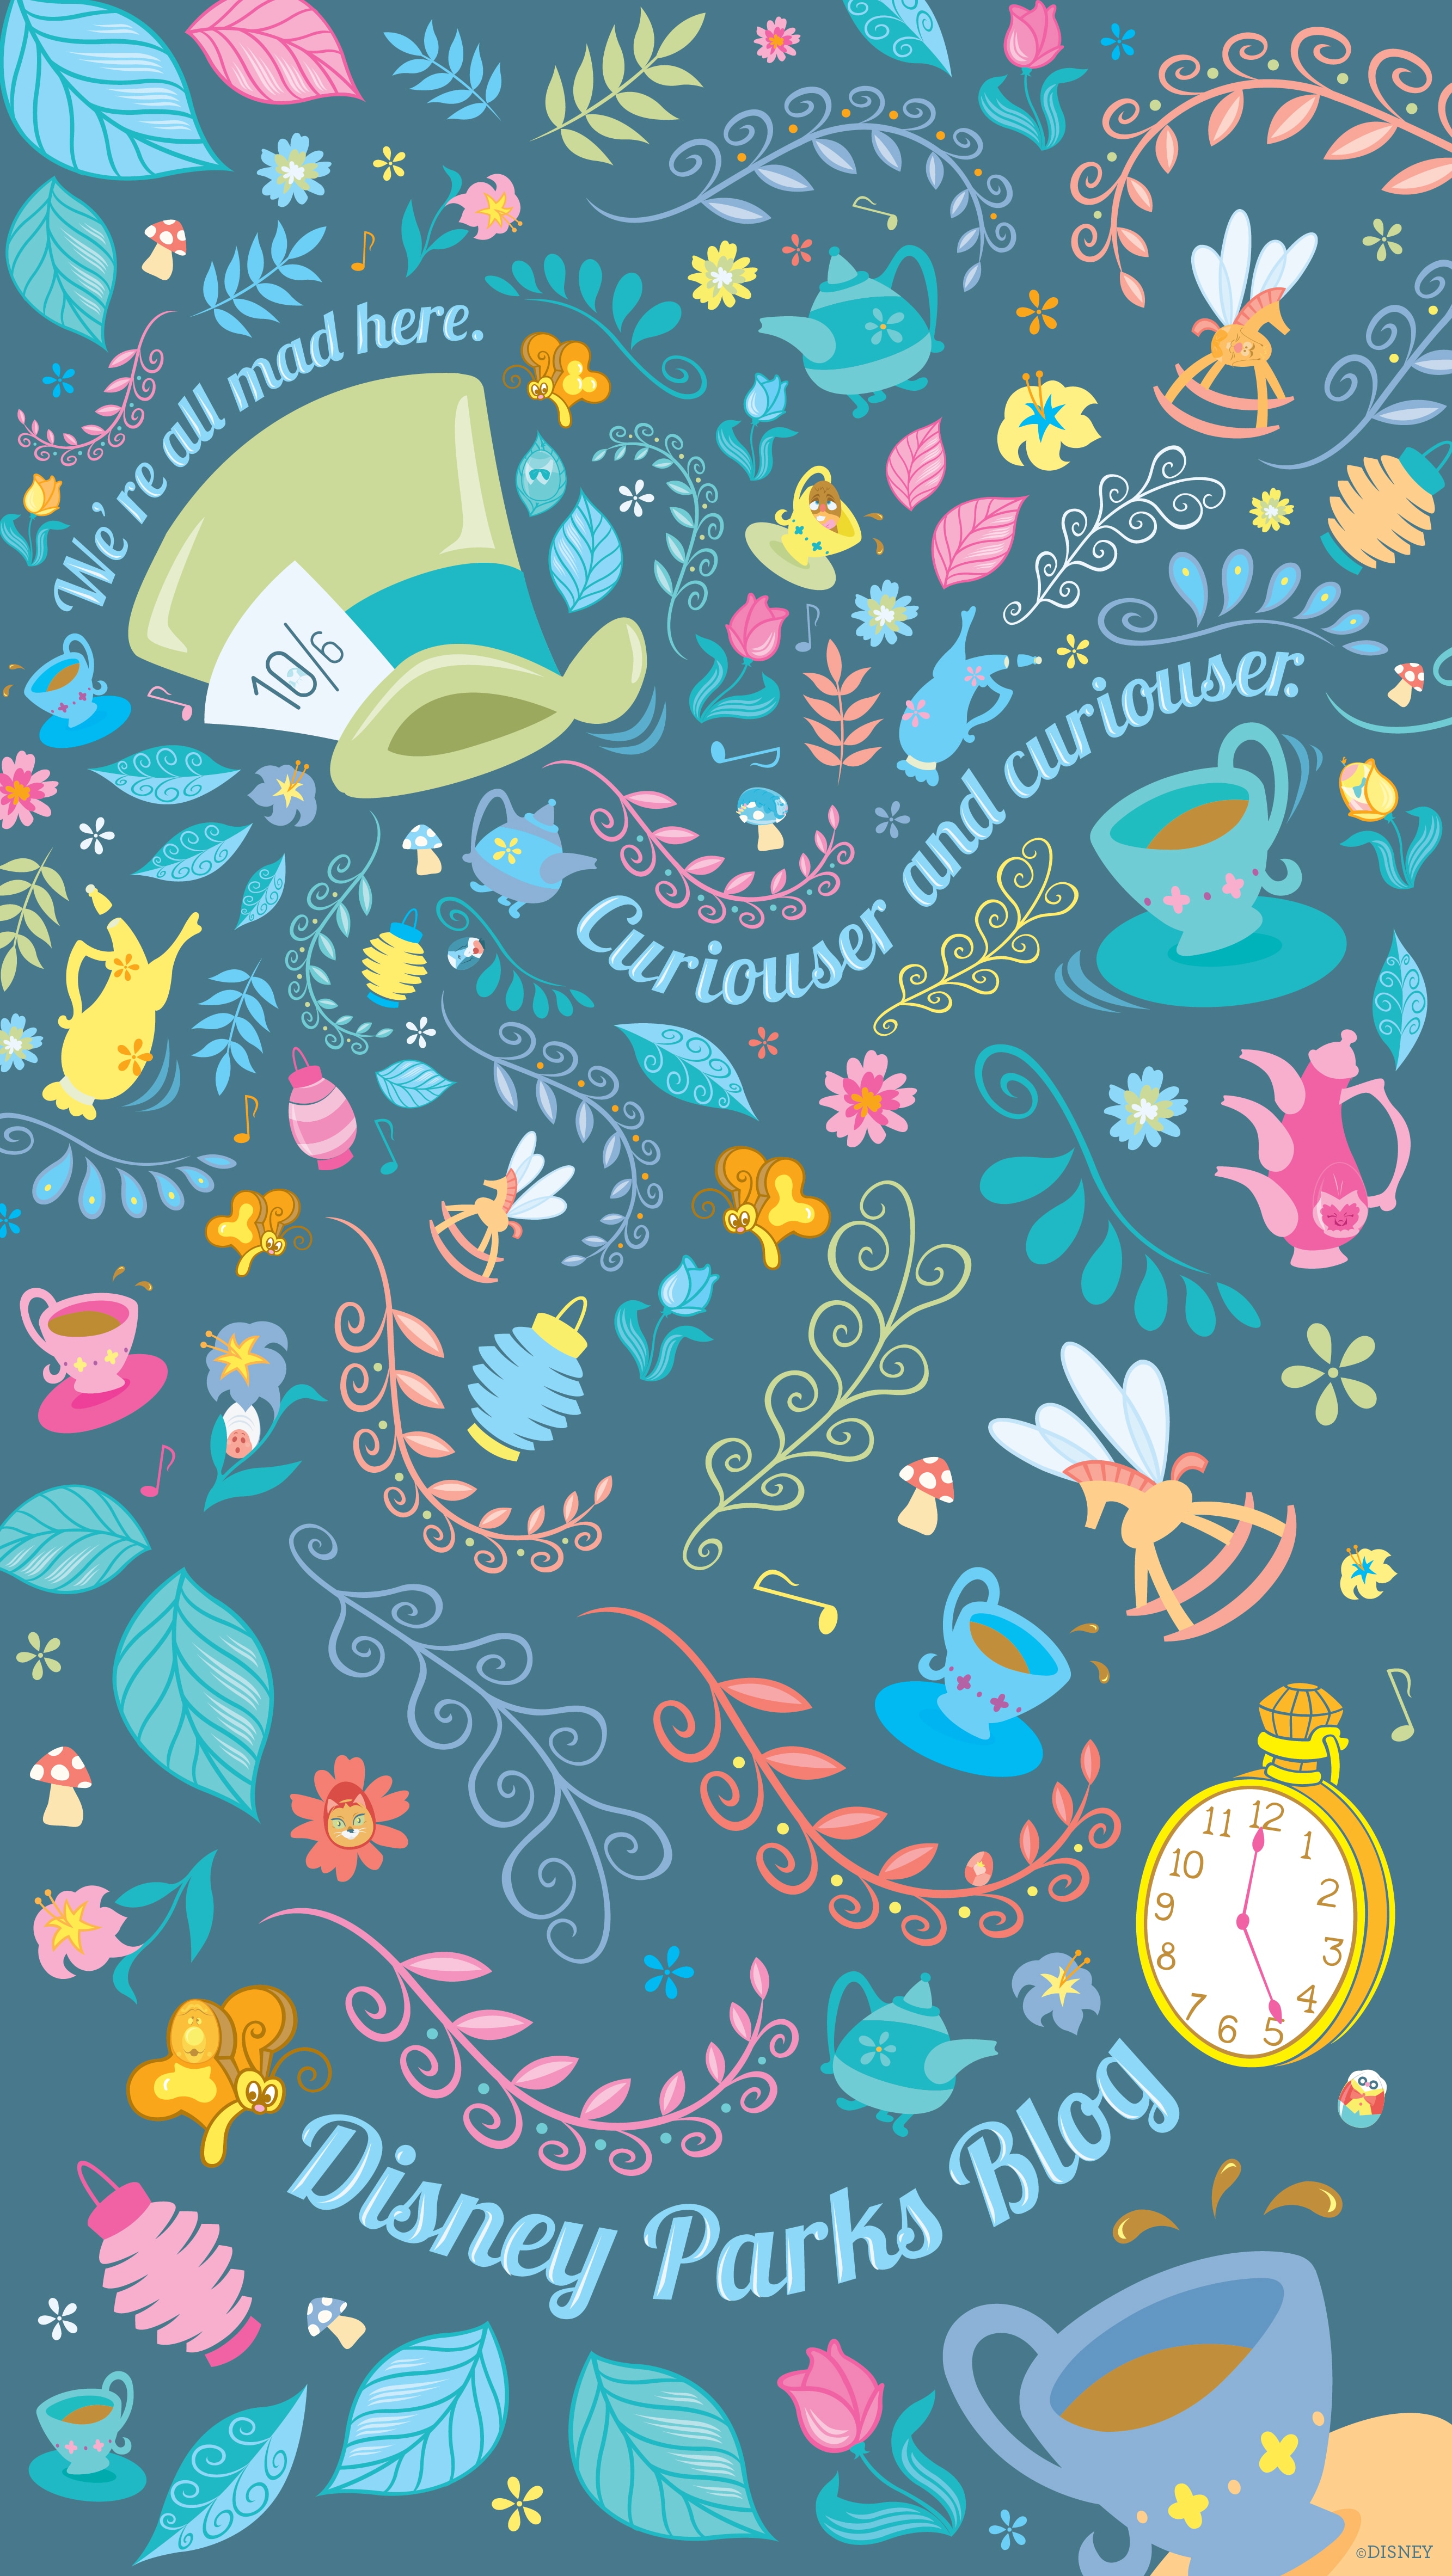 Easter Egg Hunt Wallpaper – Mobile | Disney Parks Blog